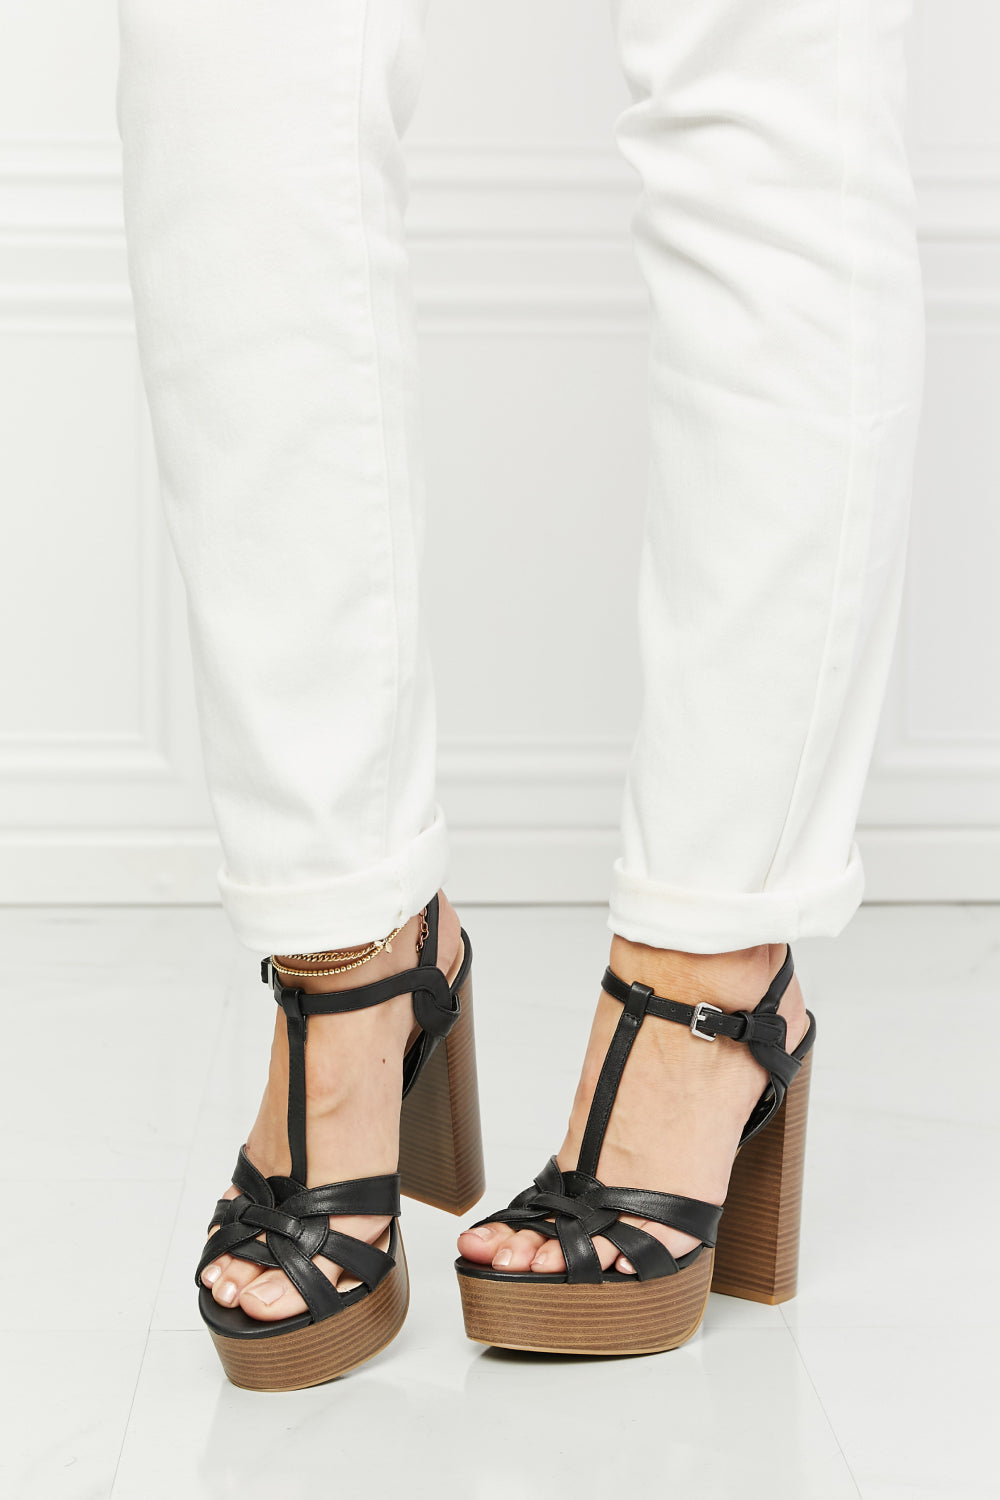 Lib Peep Toe Platforms Ankle Belt Buckle T Straps Chunky Heels Sandals -  Gold in Sexy Heels & Platforms - $75.85